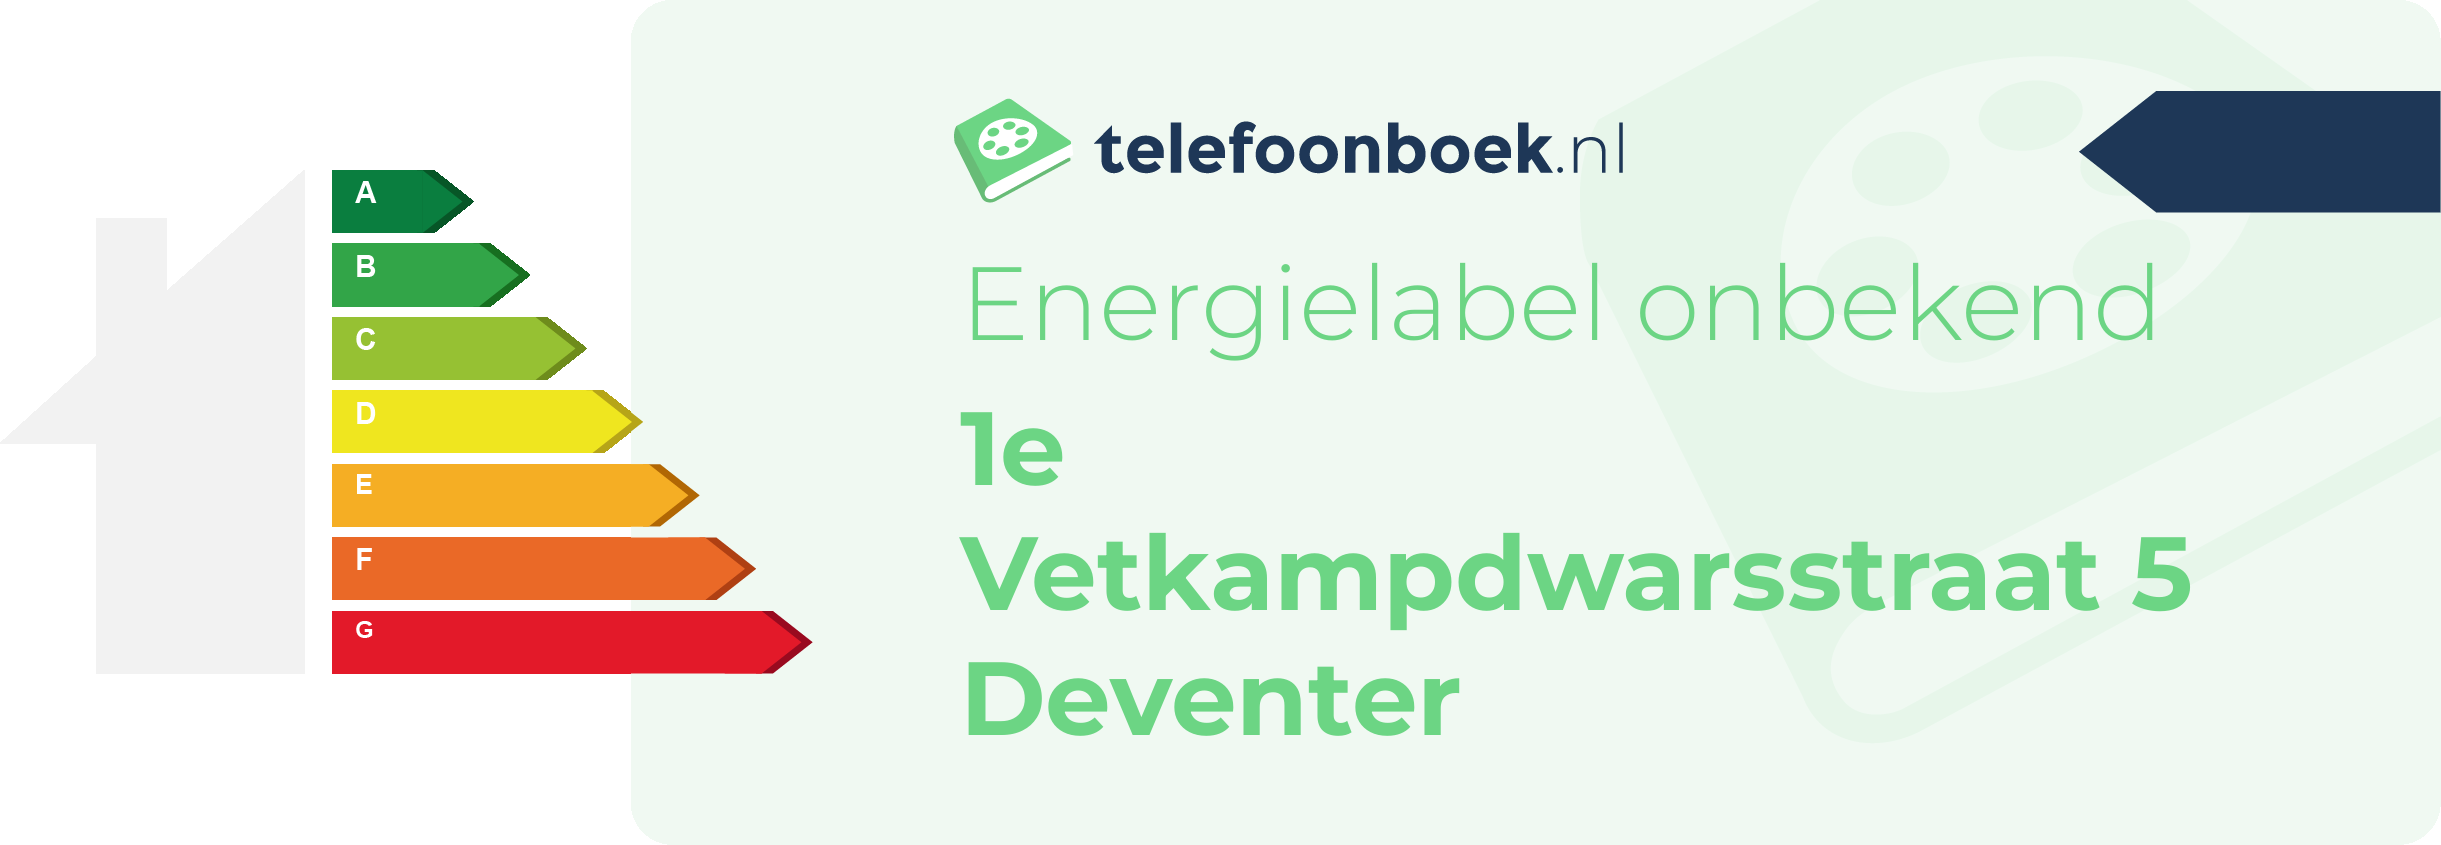 Energielabel 1e Vetkampdwarsstraat 5 Deventer